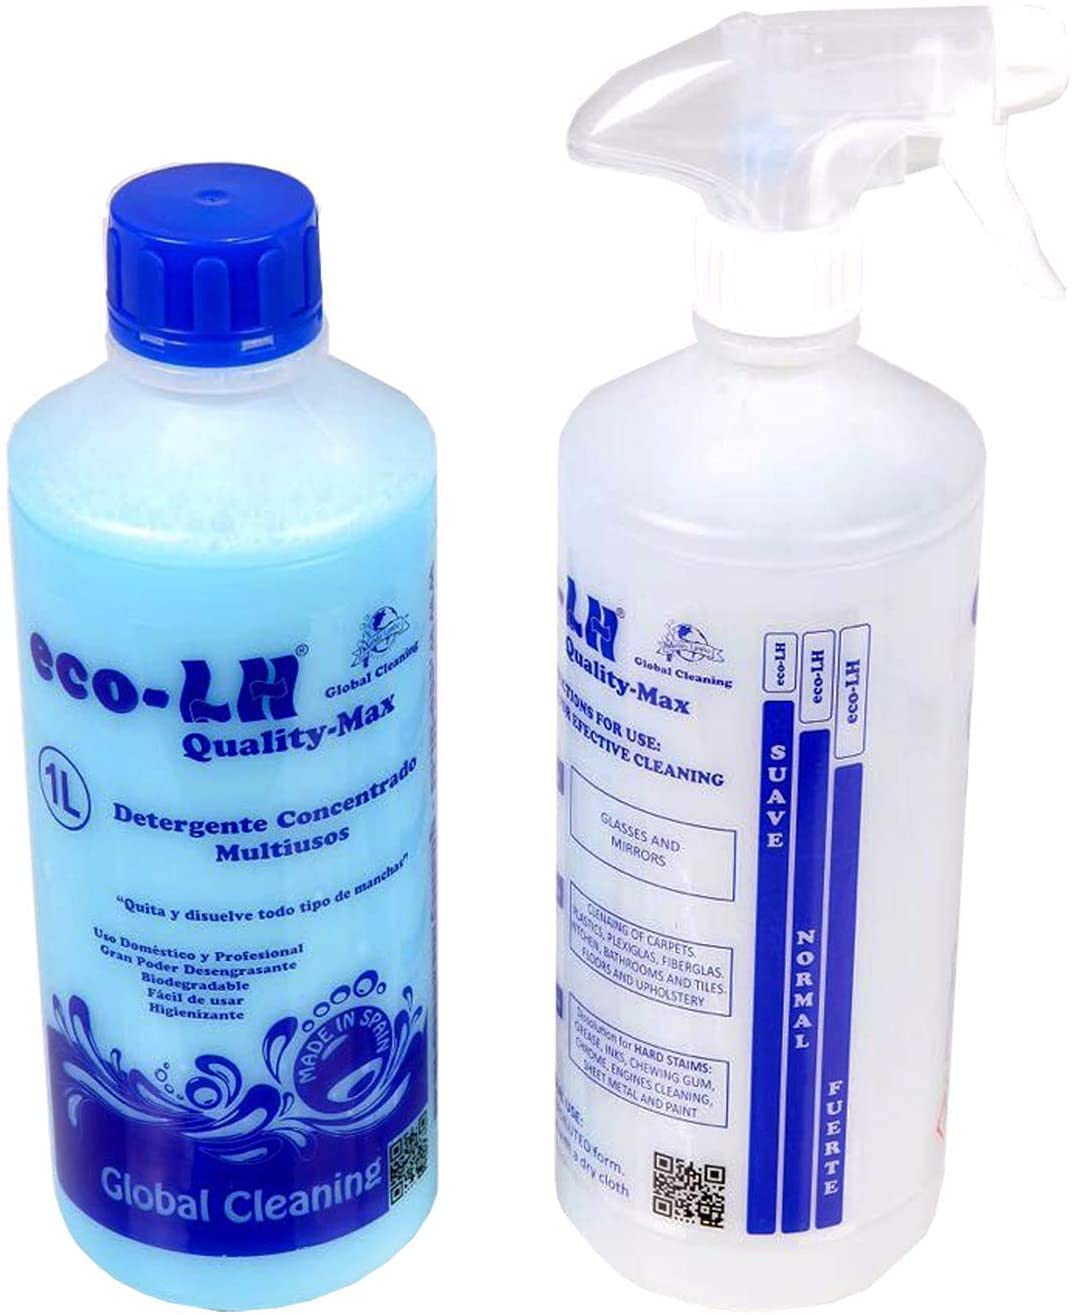 Limpiador multiusos perfumado ecológico ultra concentrado ECO-LH con aroma SPA